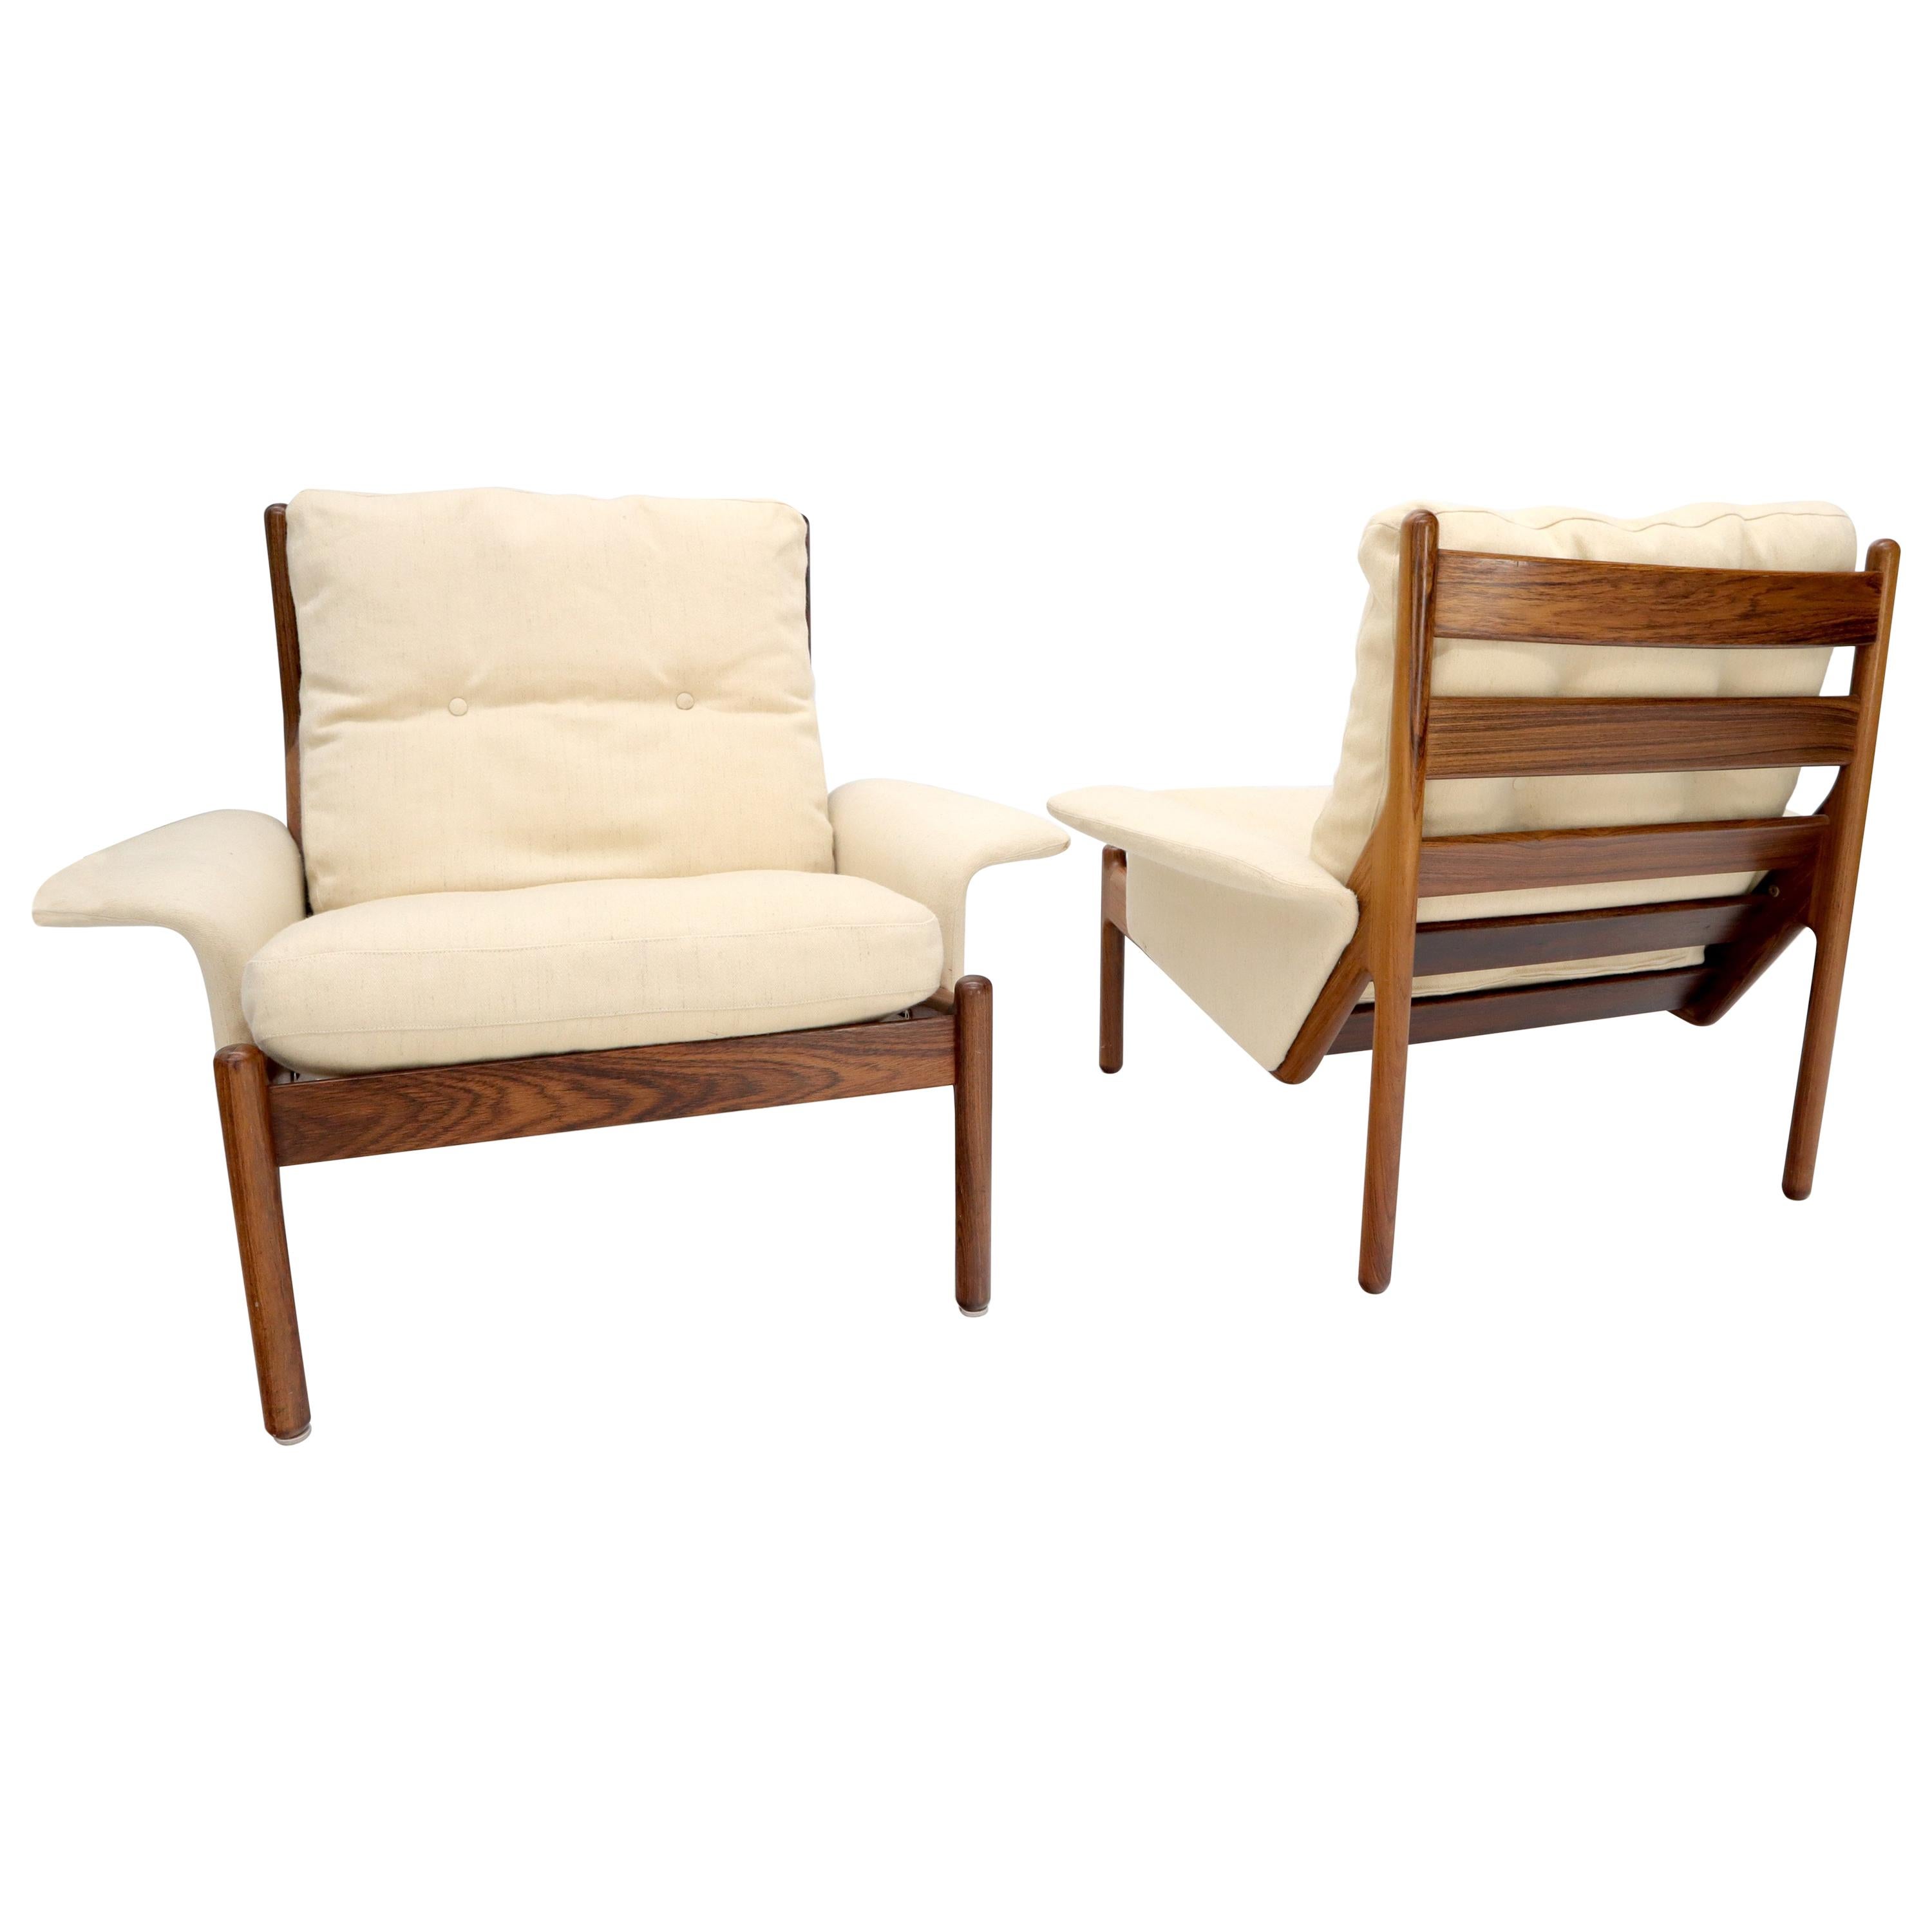 Pair of Danish Modern Virgin Wool Upholstery Rosewood Frames Longe Chairs  For Sale